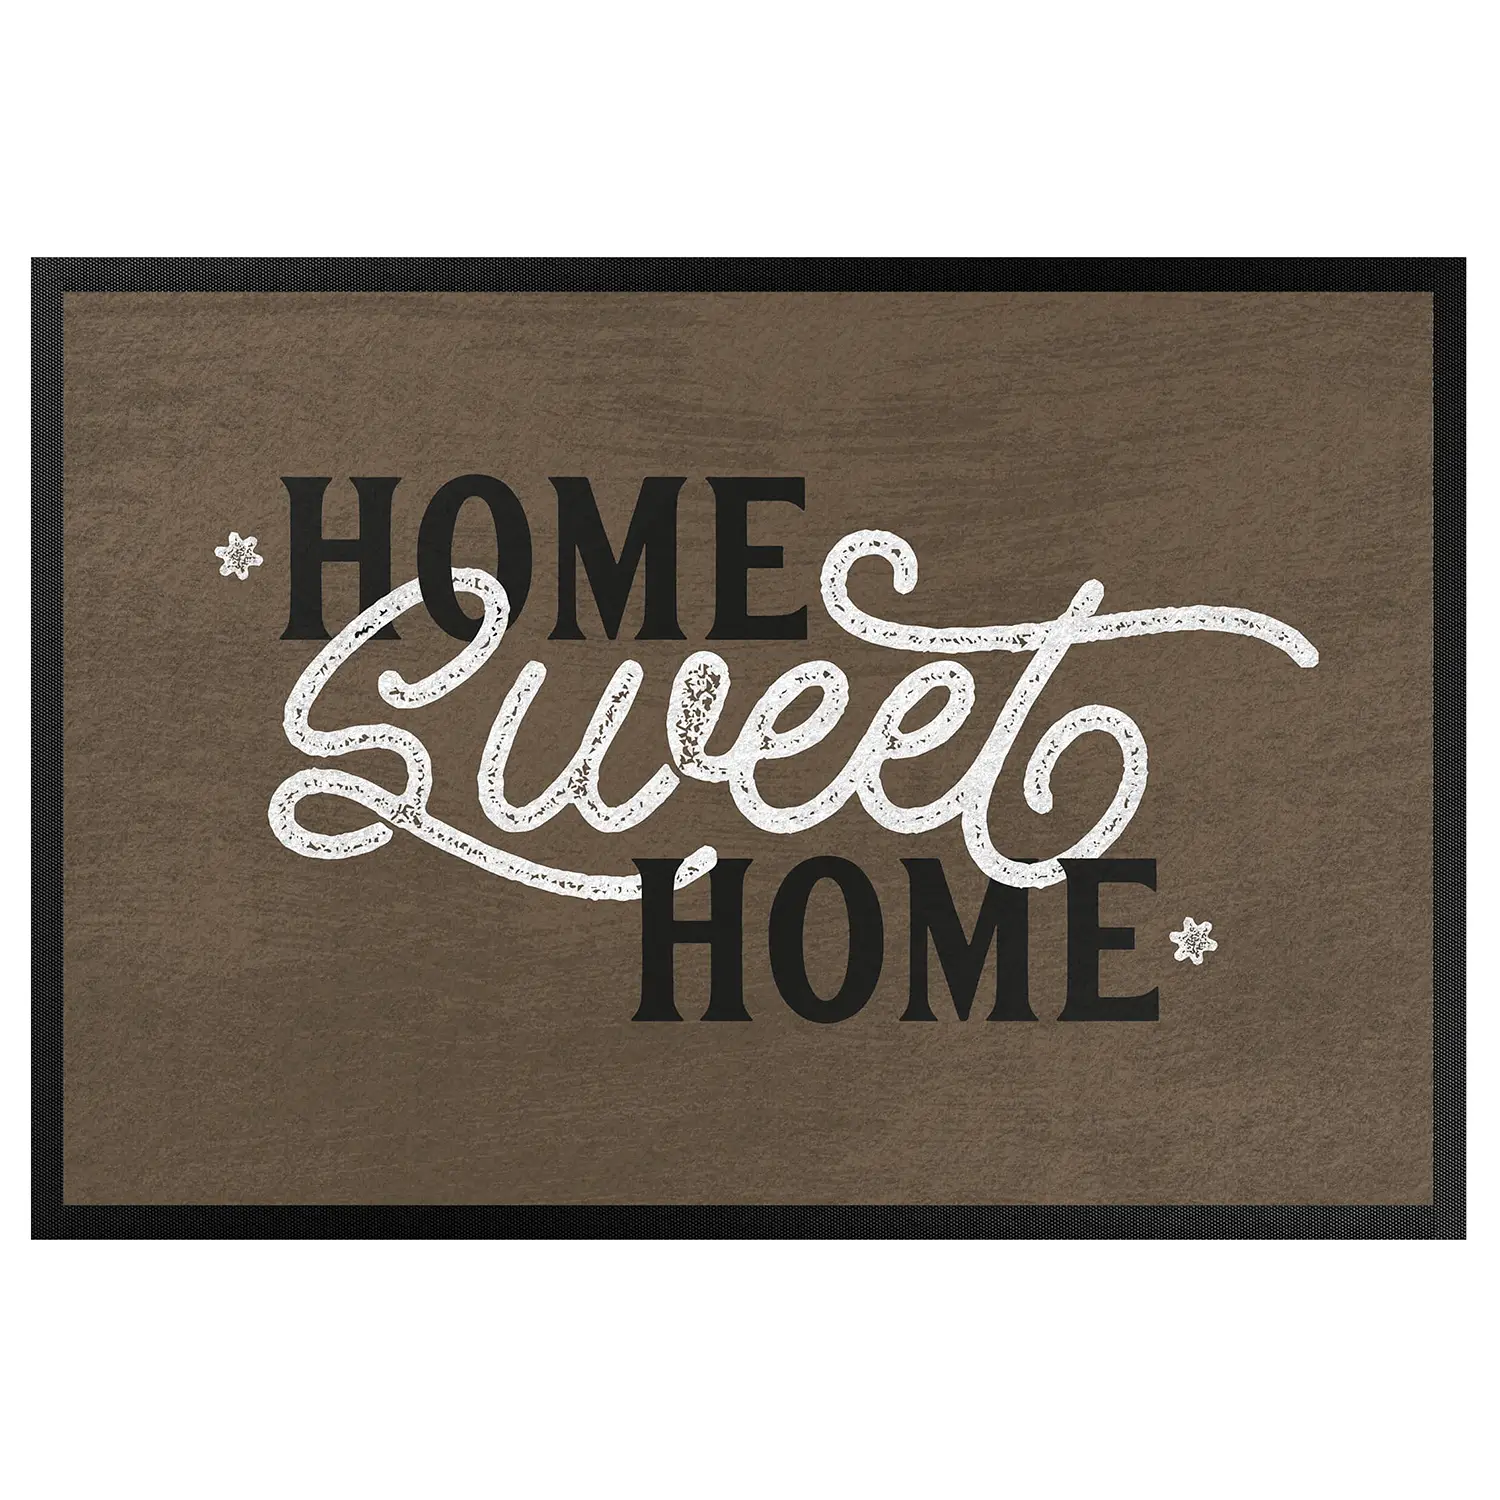 Shabby Fu脽matte Home Home Sweet